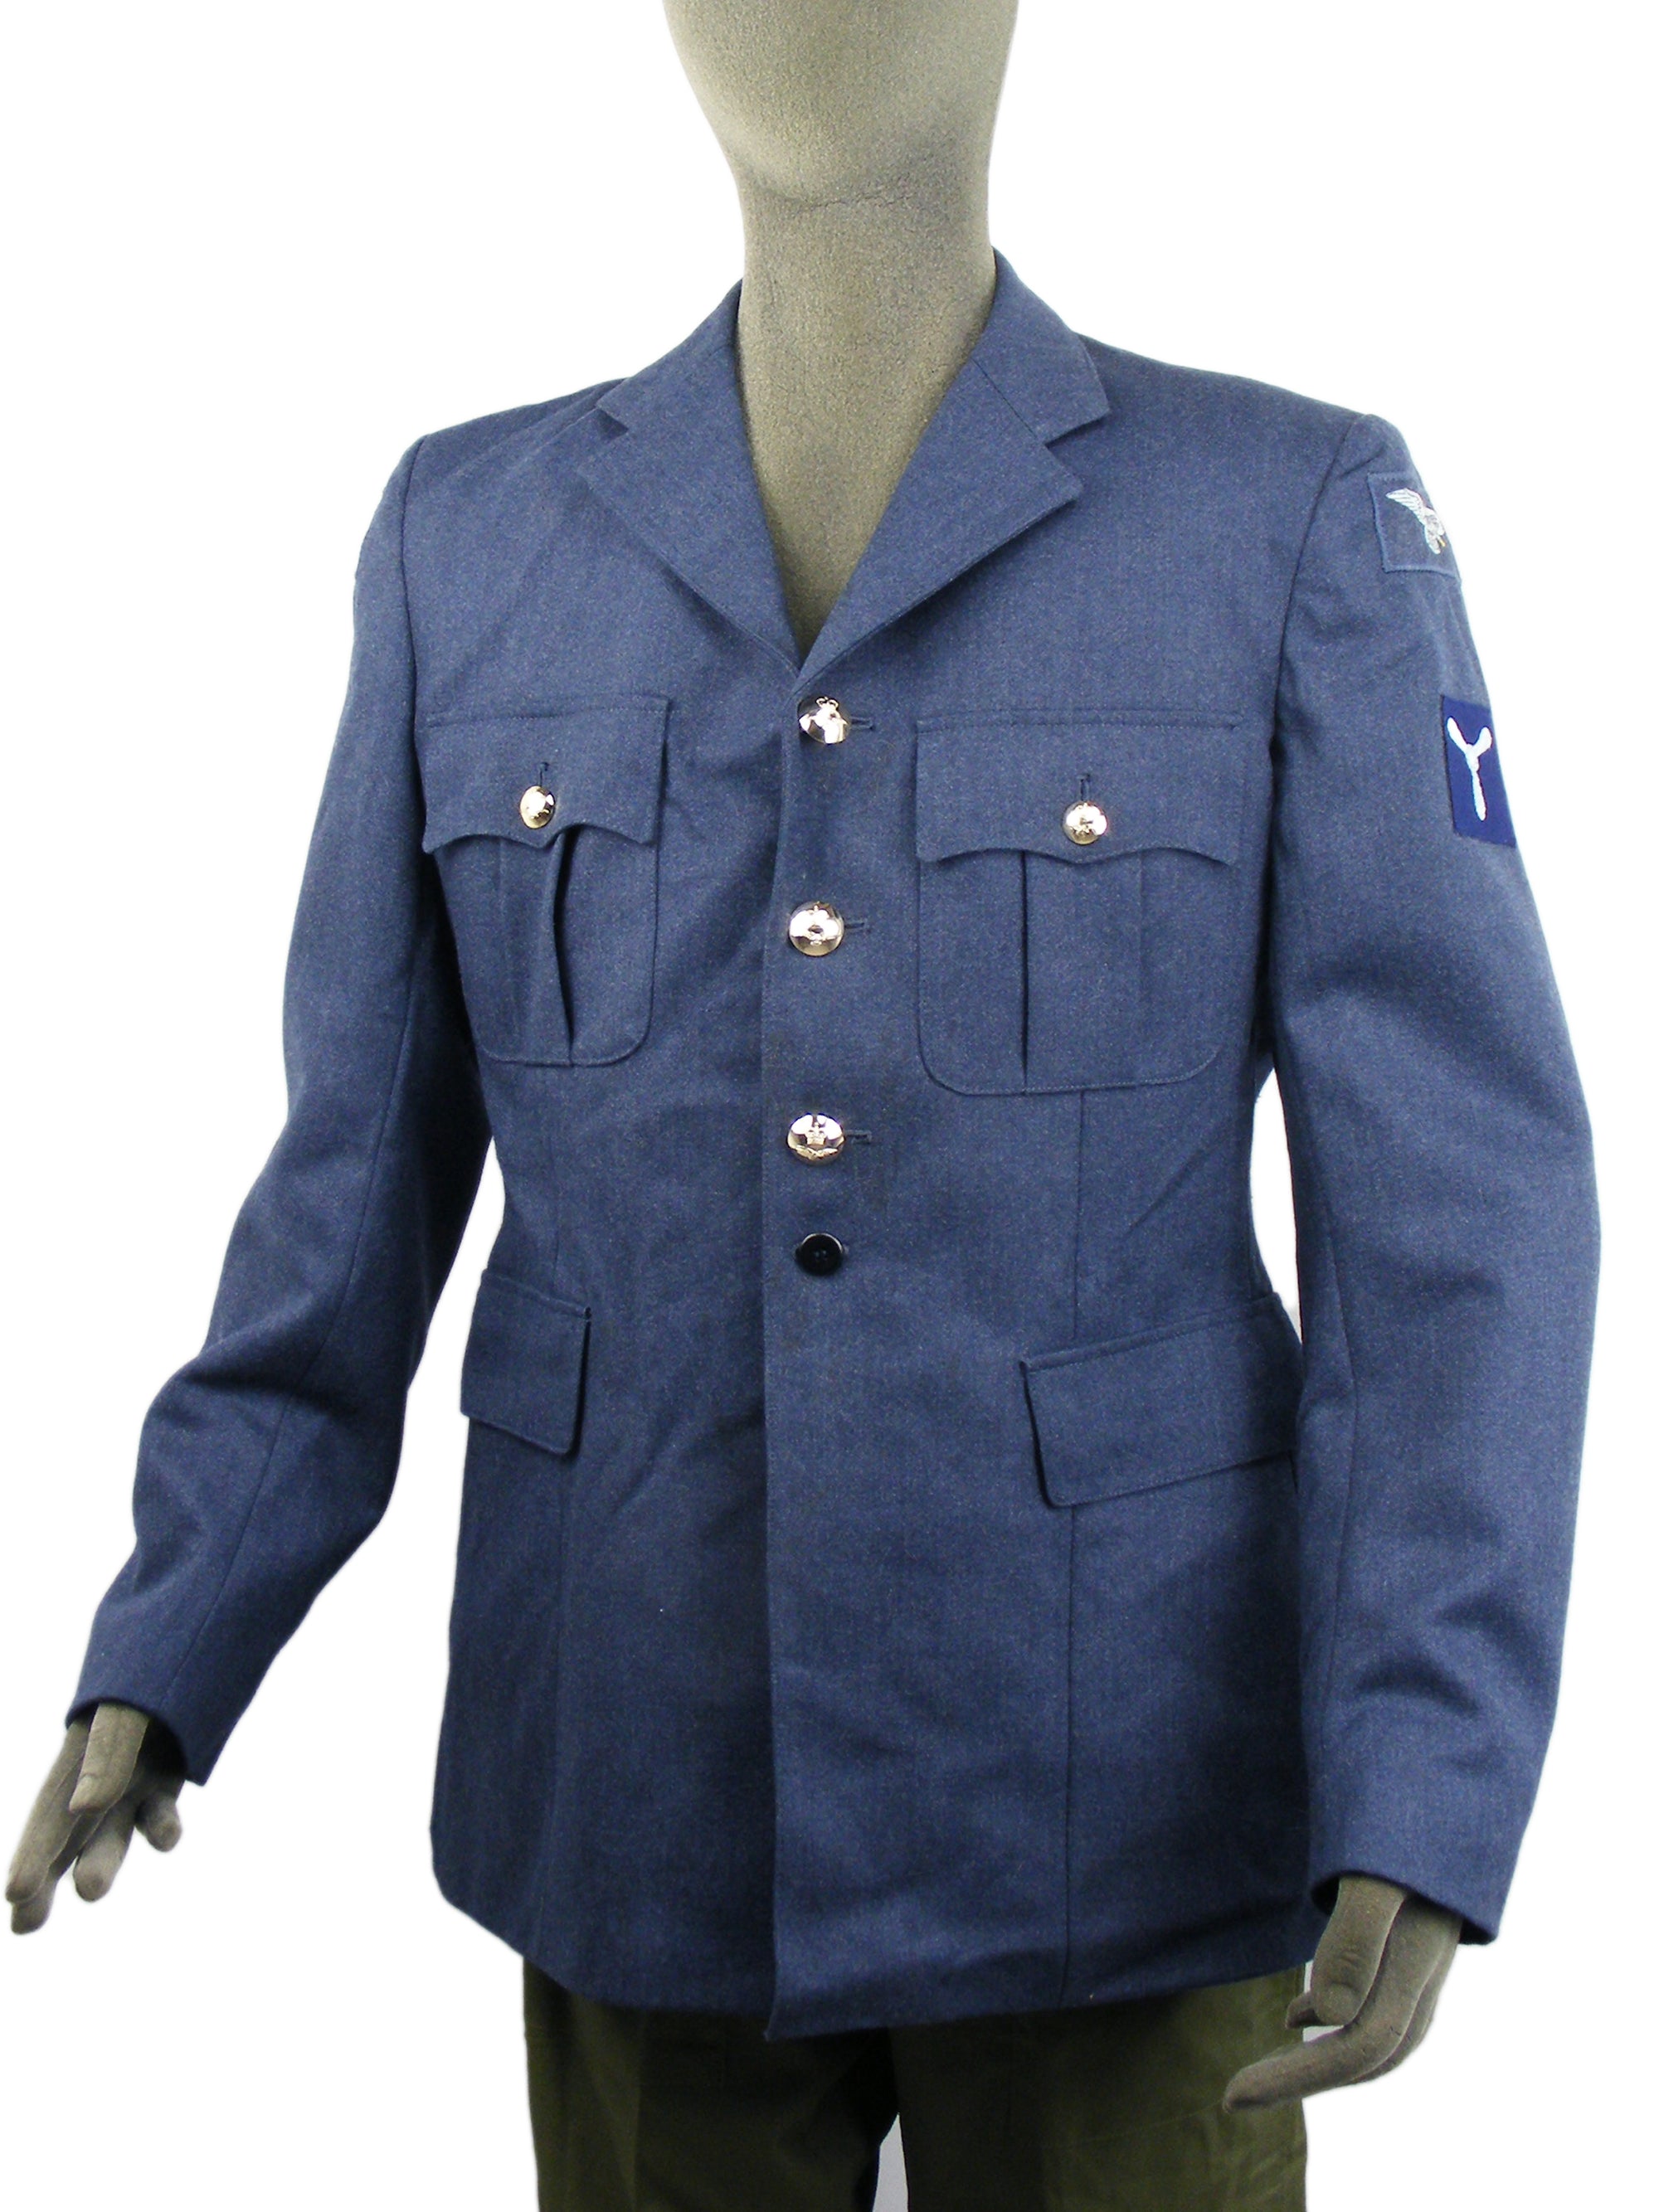 British Royal Air Force No 1 Uniform - RAF dress jacket